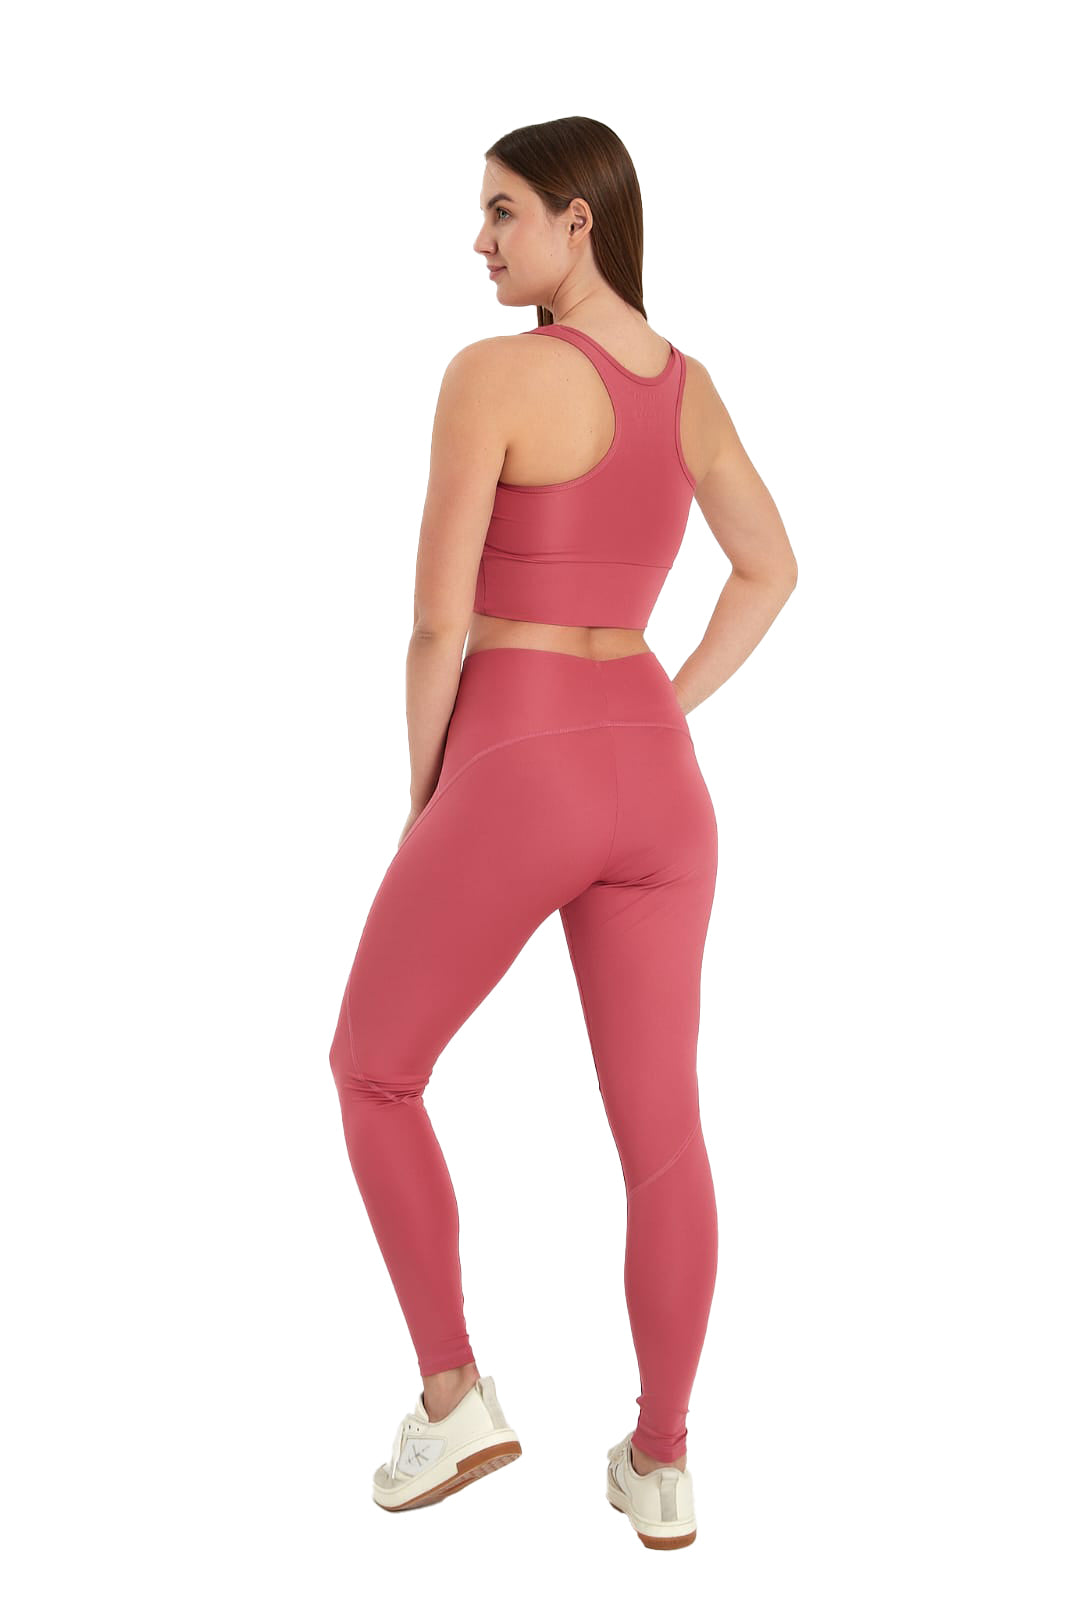 Ladies Sports Top Bra, Comfortable Soft Workout Bra - NEW ARRIVALS! - Wear Sierra